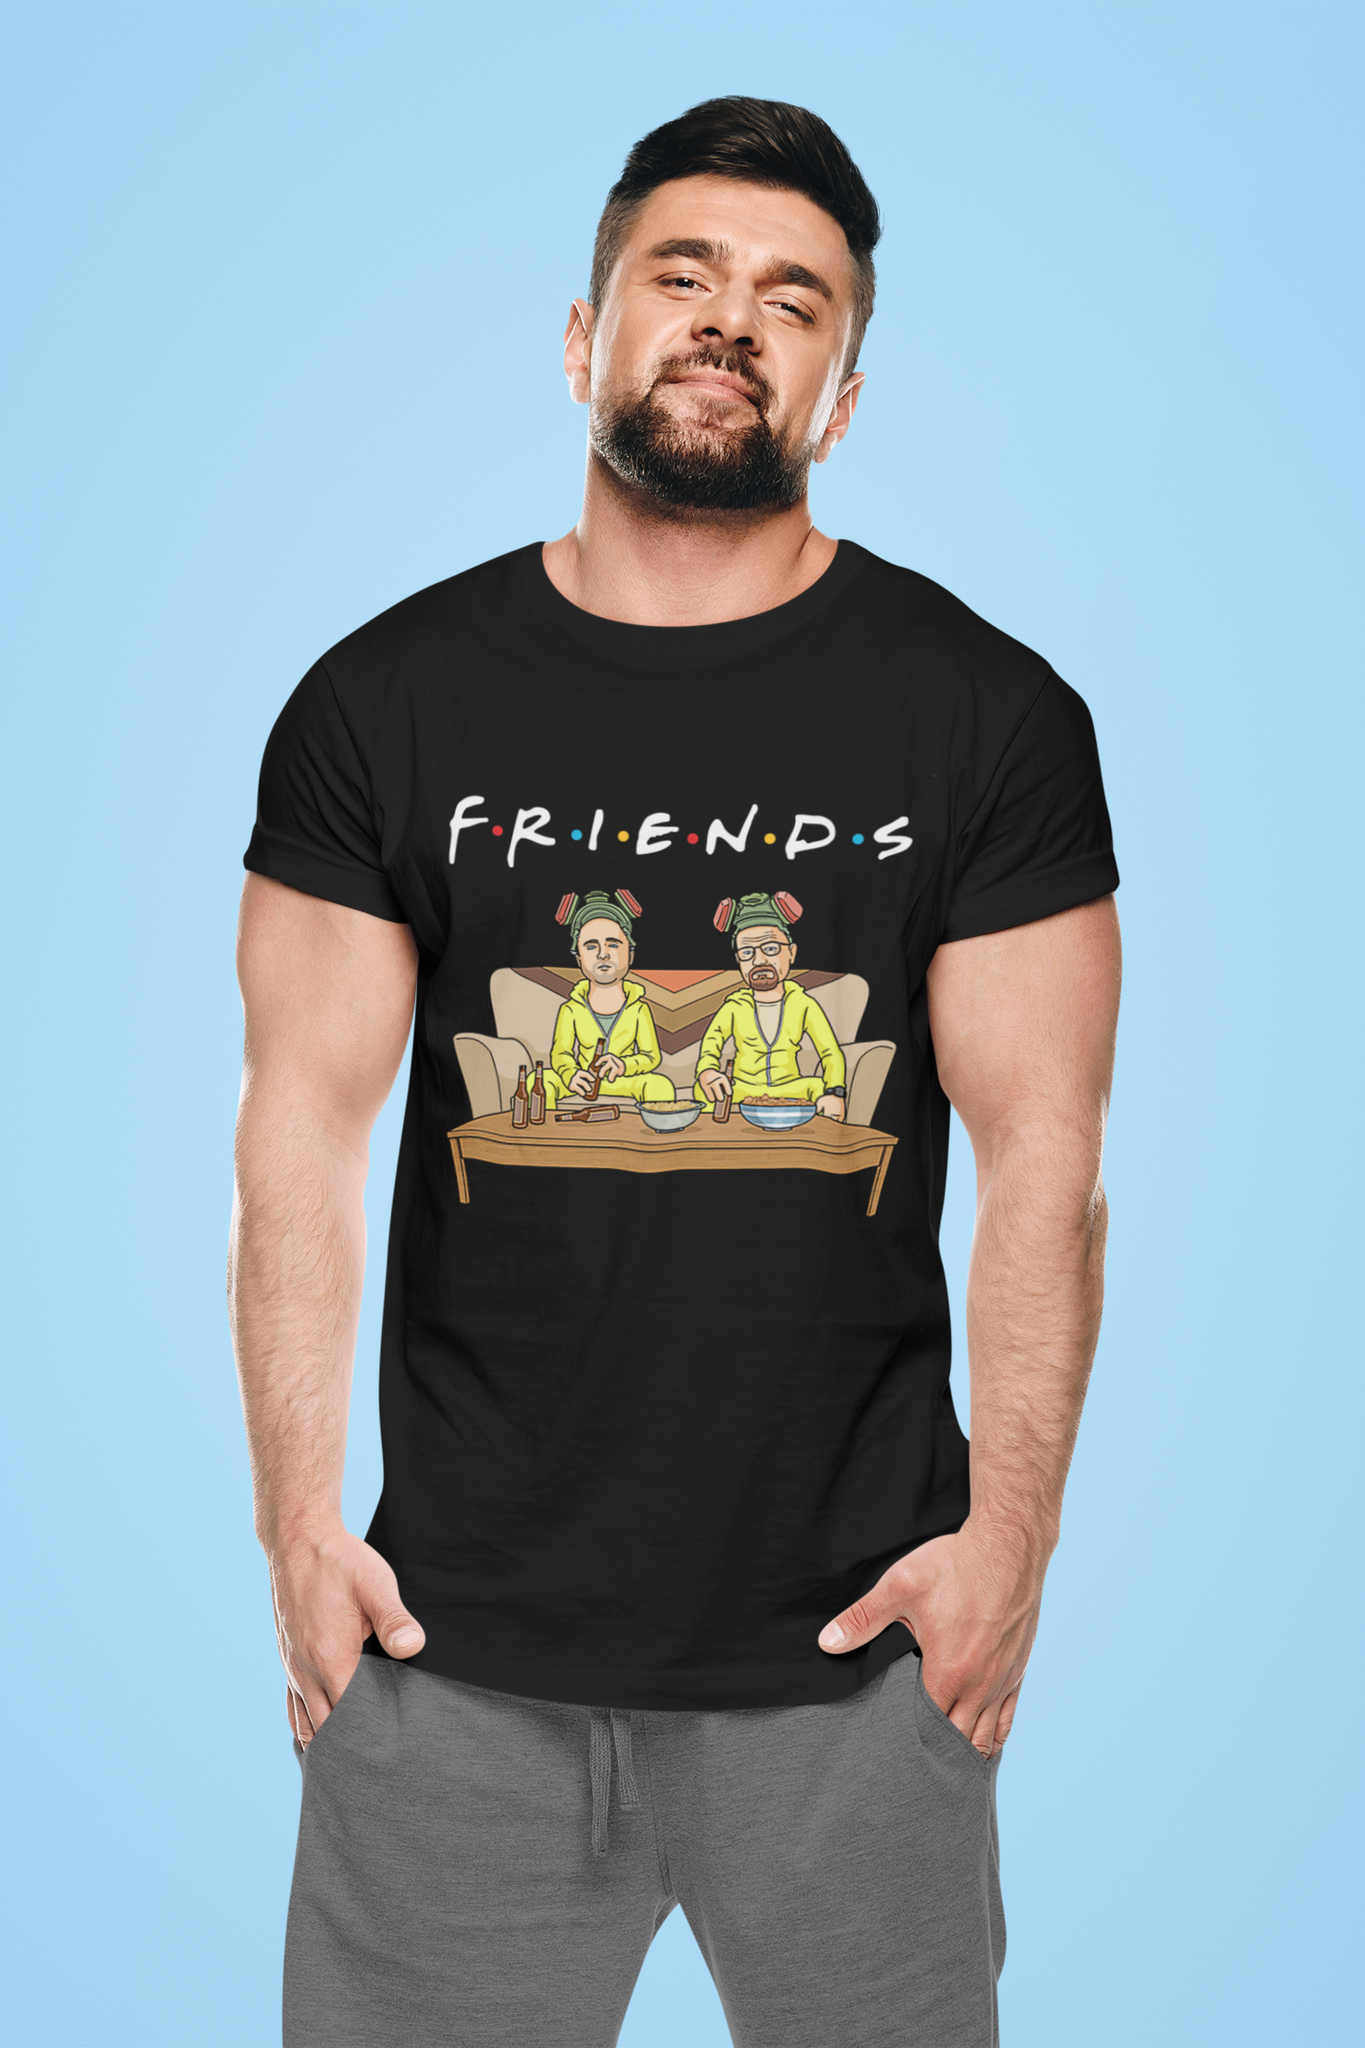 Breaking Bad T Shirt, Jesse Pinkman Walter White T Shirt, Friends Tshirt